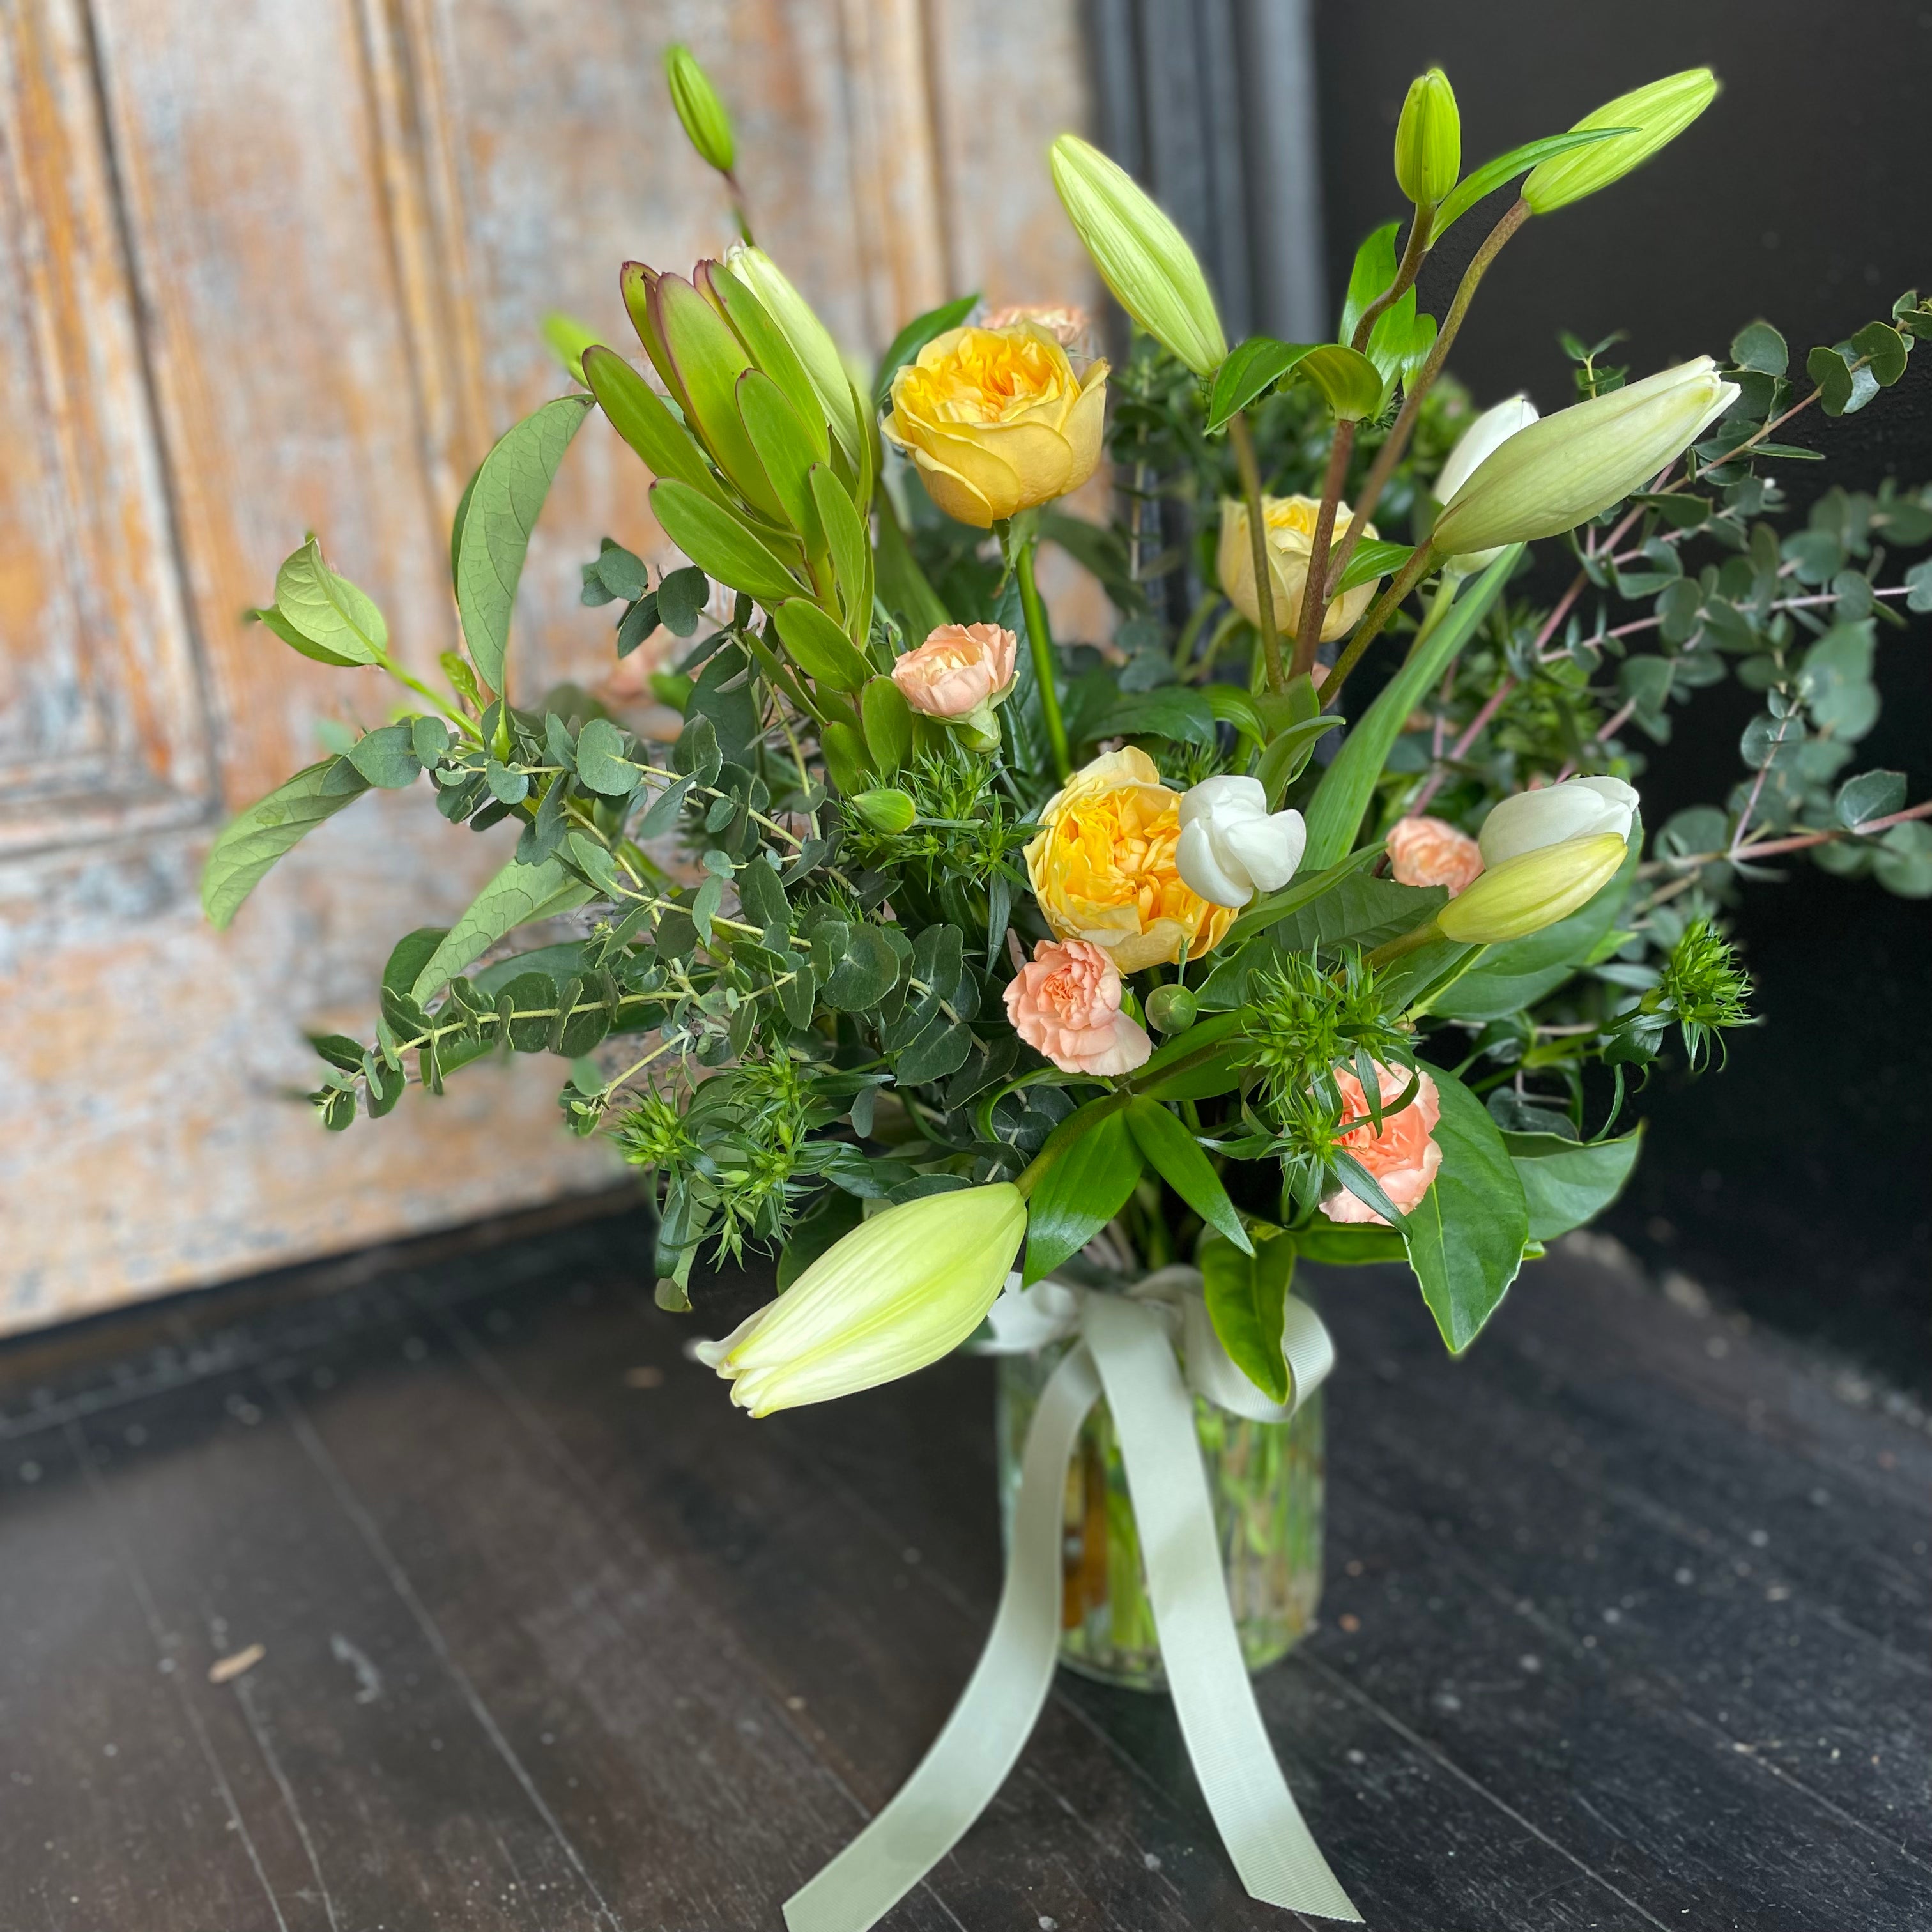 Bendigo Florist Blumetown Yellow, Peach and White flowers in glass vase with sage green ribbon. 